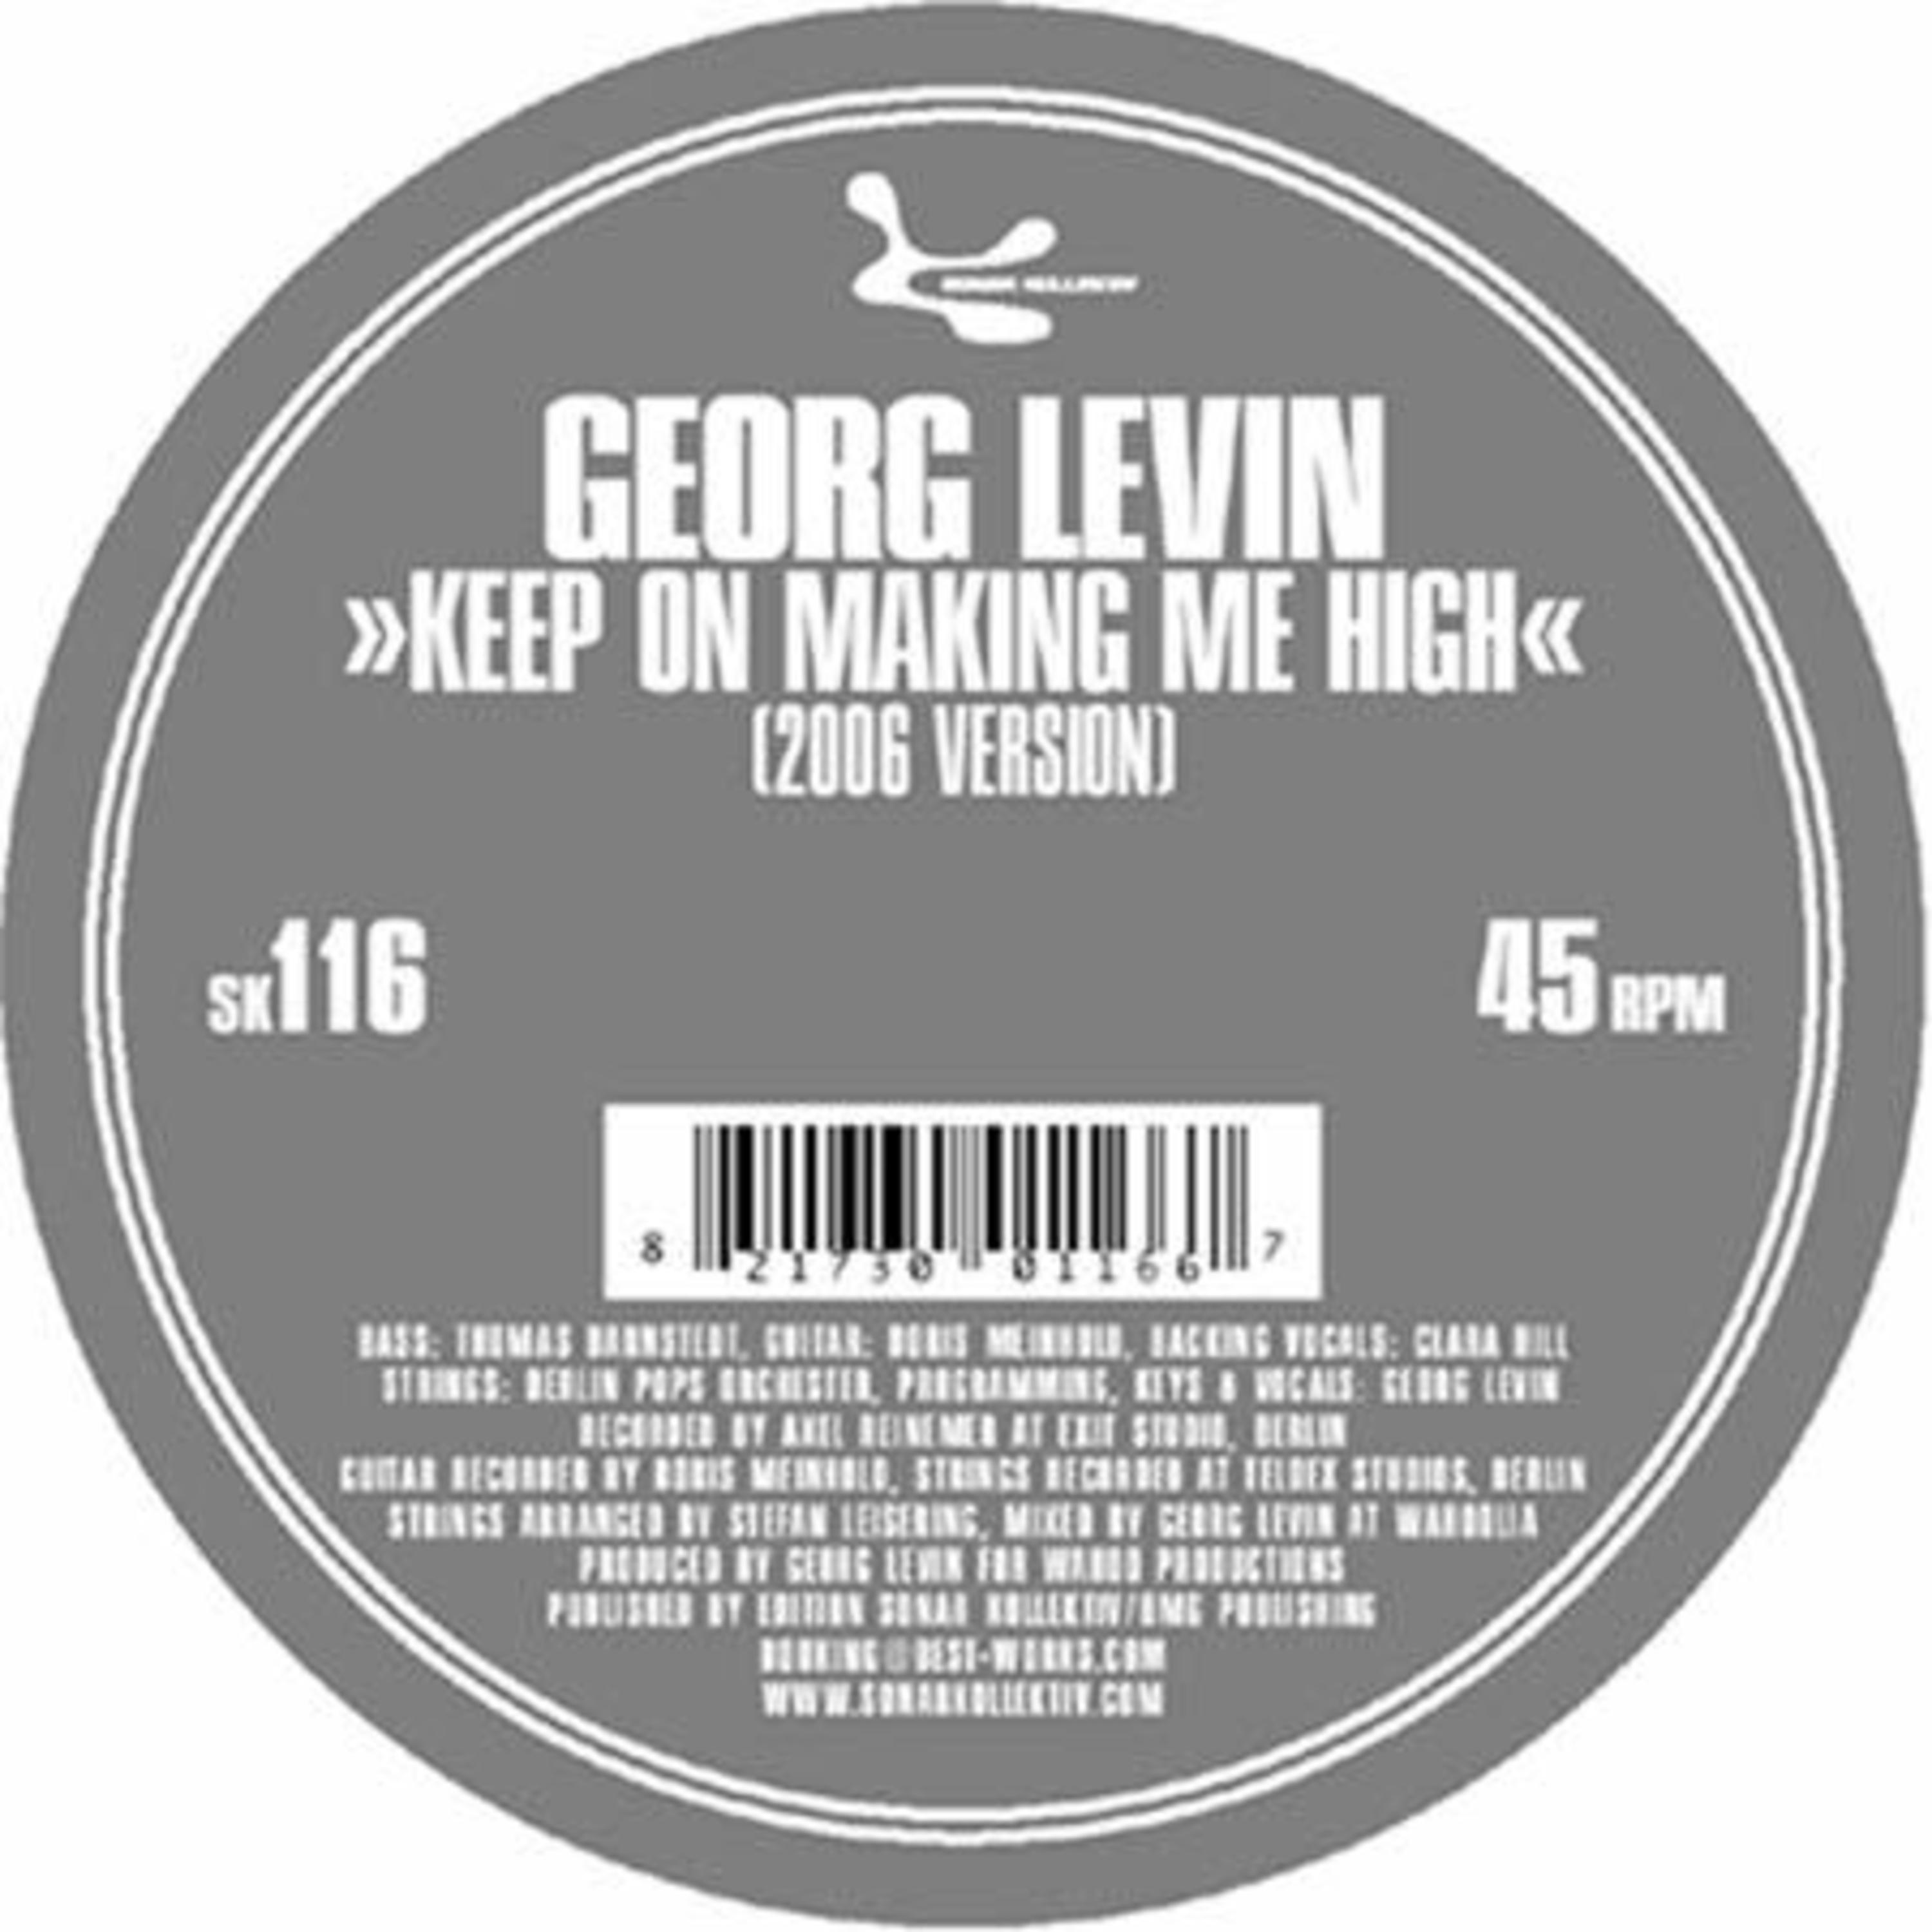 Keep On Making Me High (2006 Version)